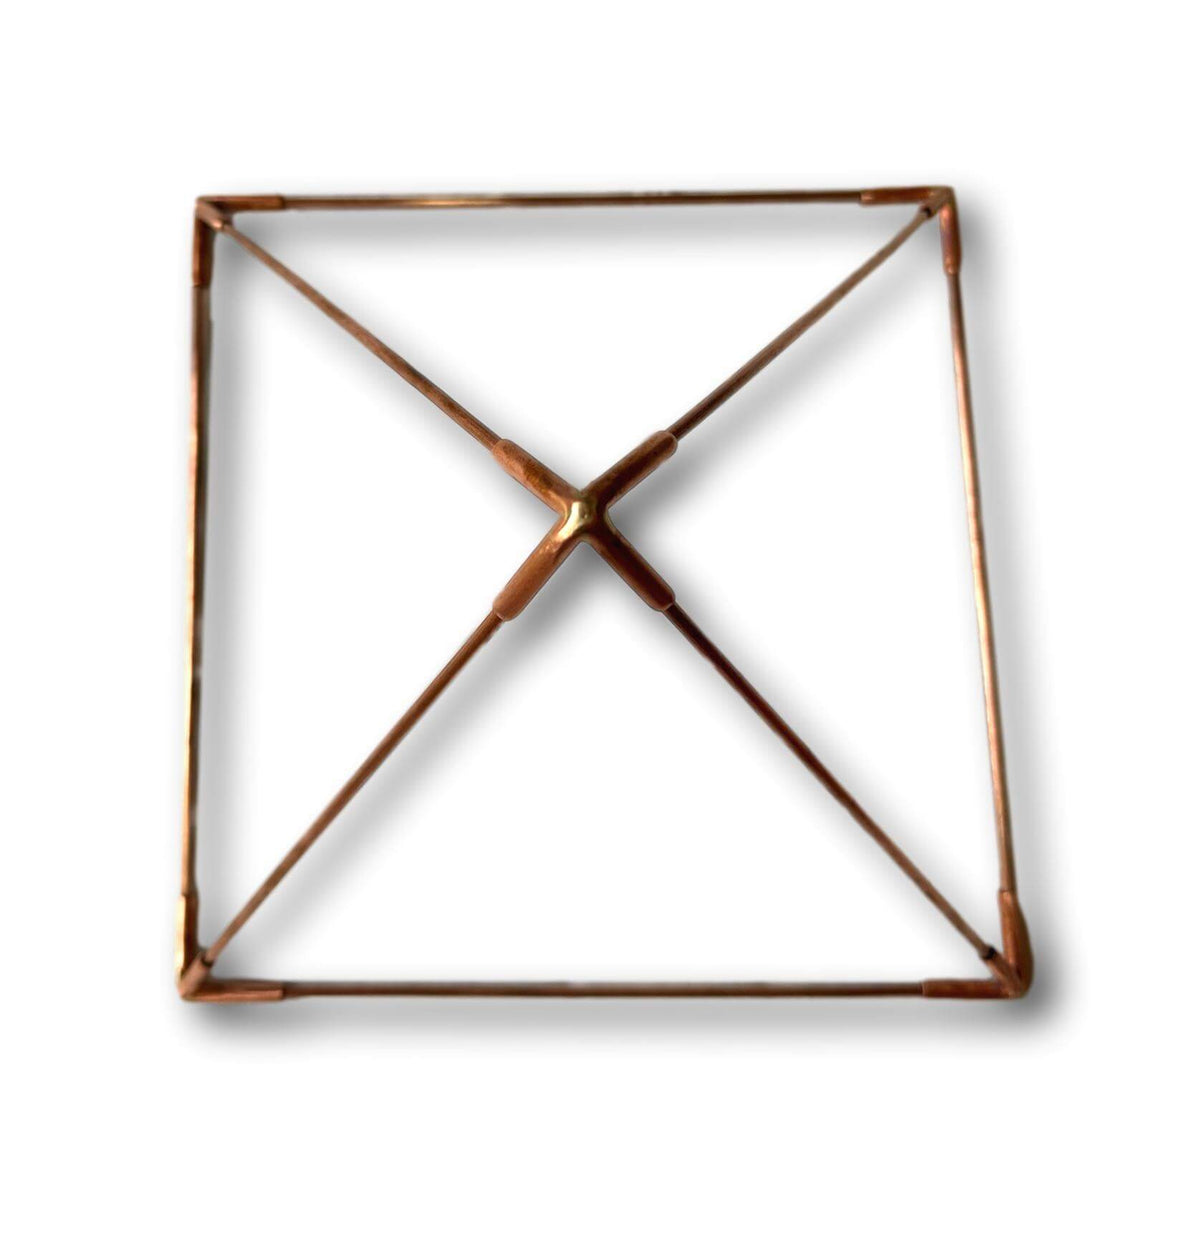 Pure Copper Conductive Pyramid - Traditionally Handmade In India 🇮🇳 26x26x18cm